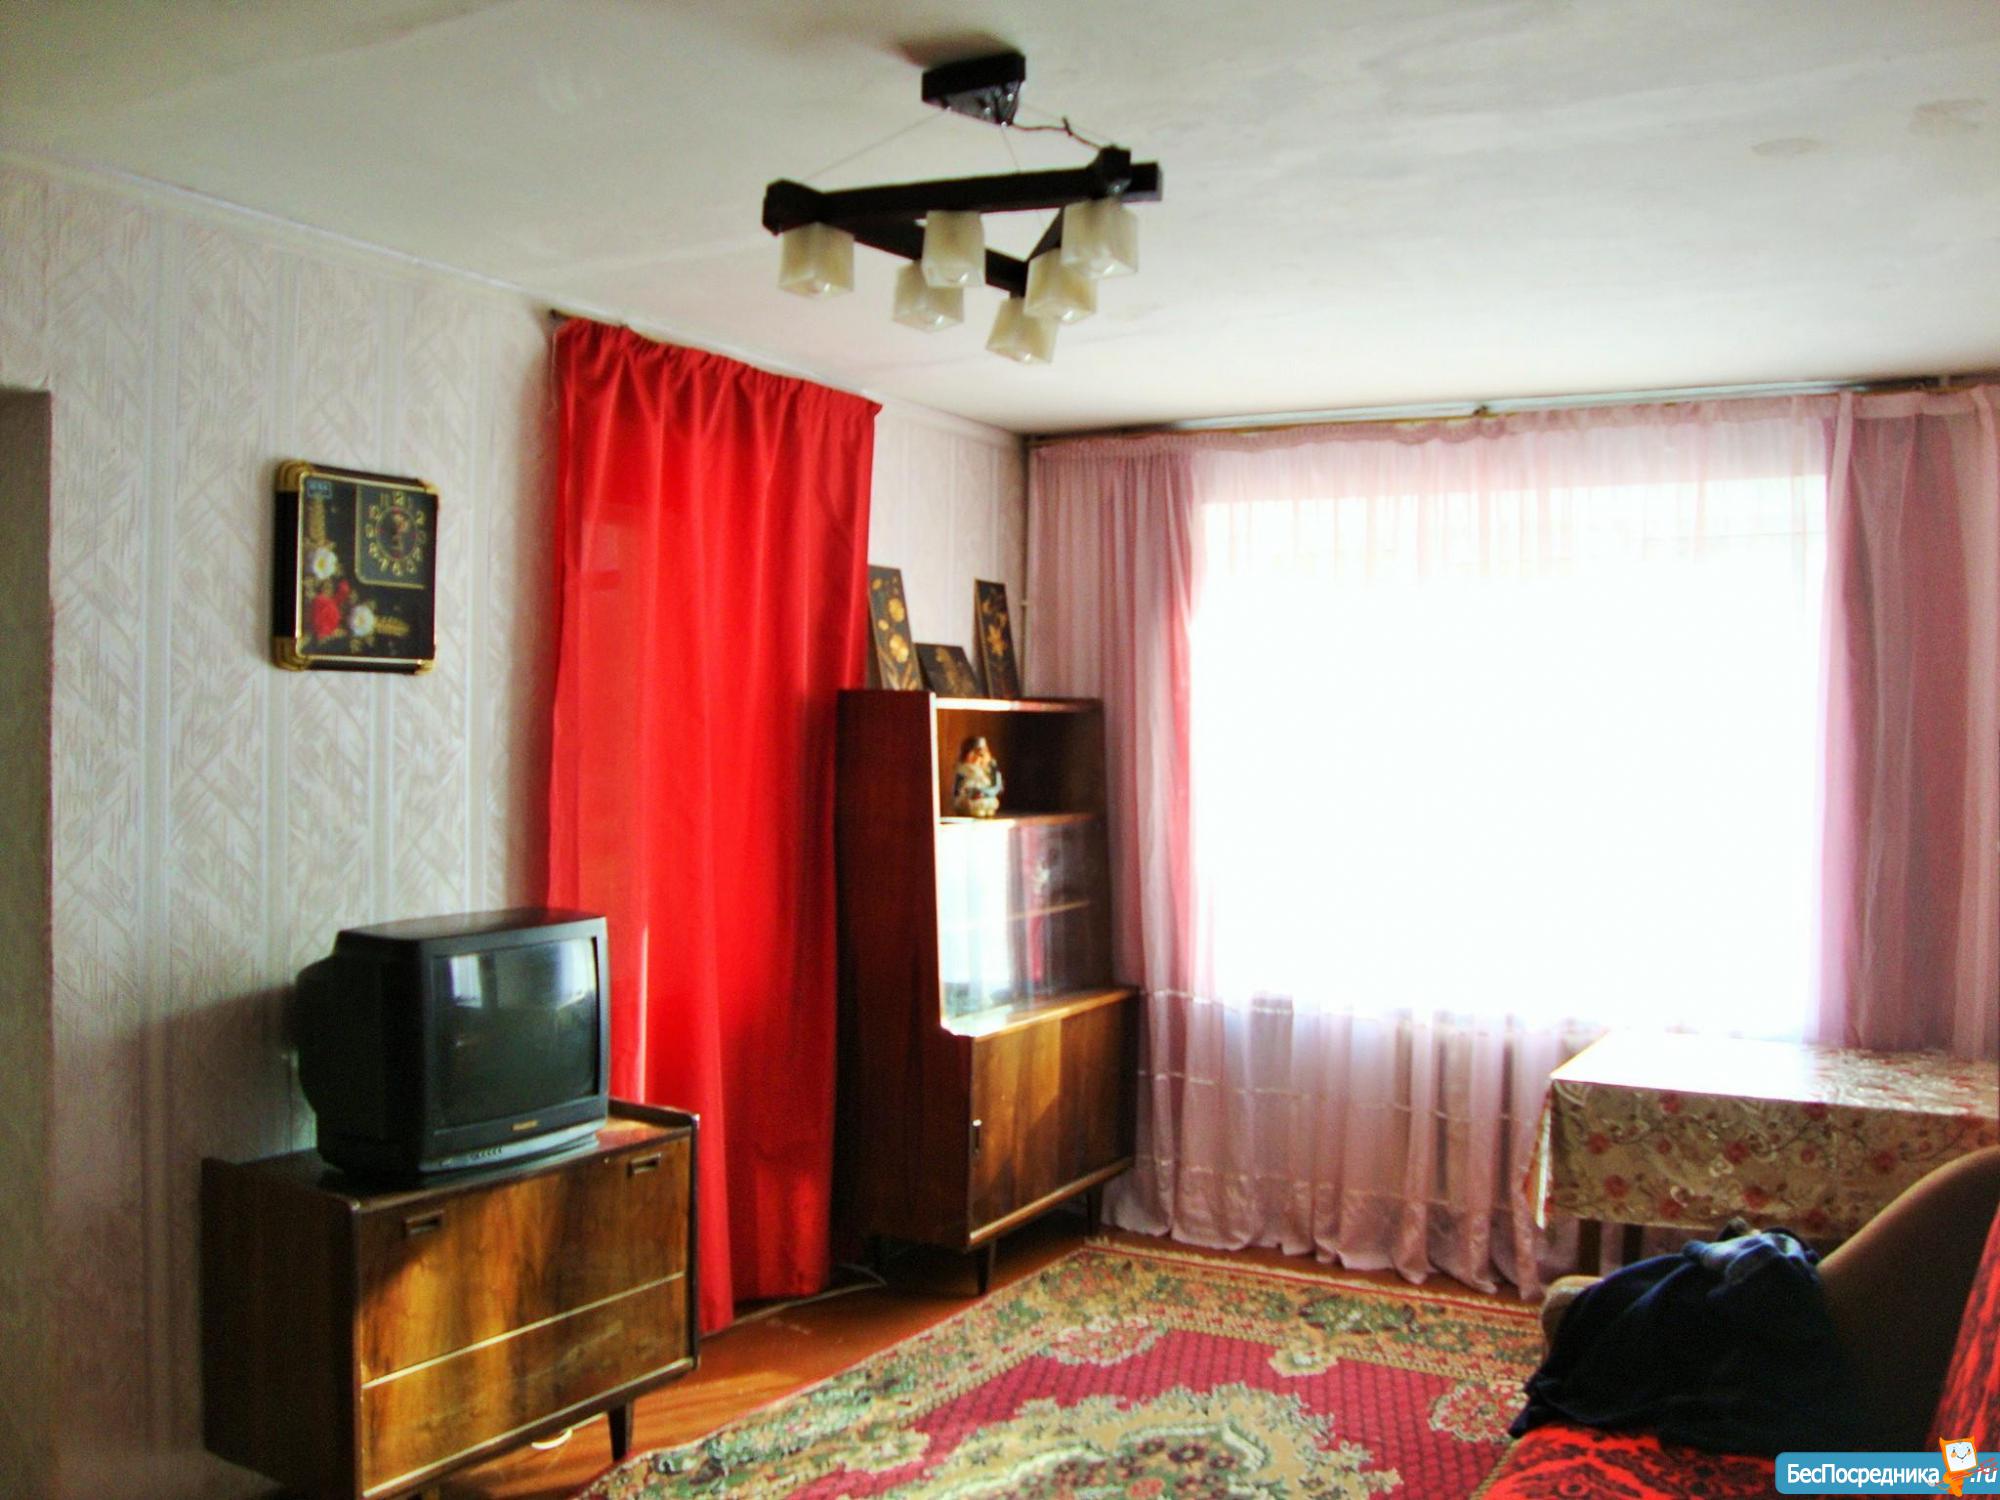 Сниму 2 комнатную квартиру без посредников и без мебели